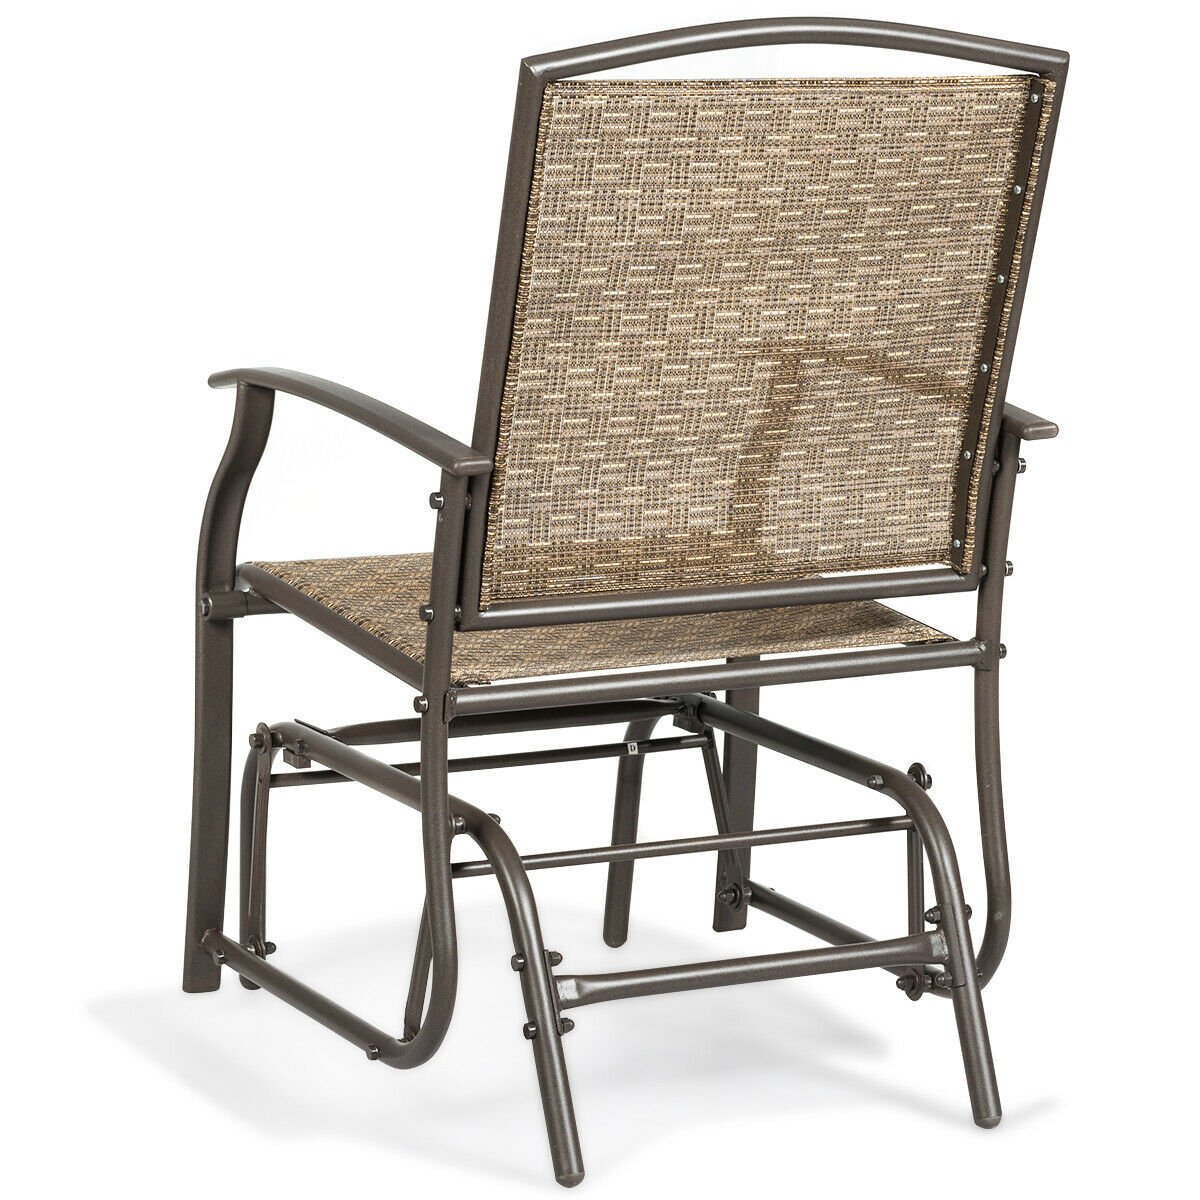 Steel Frame Garden Swing Single Glider Chair Rocking Seating, Brown - Gallery Canada